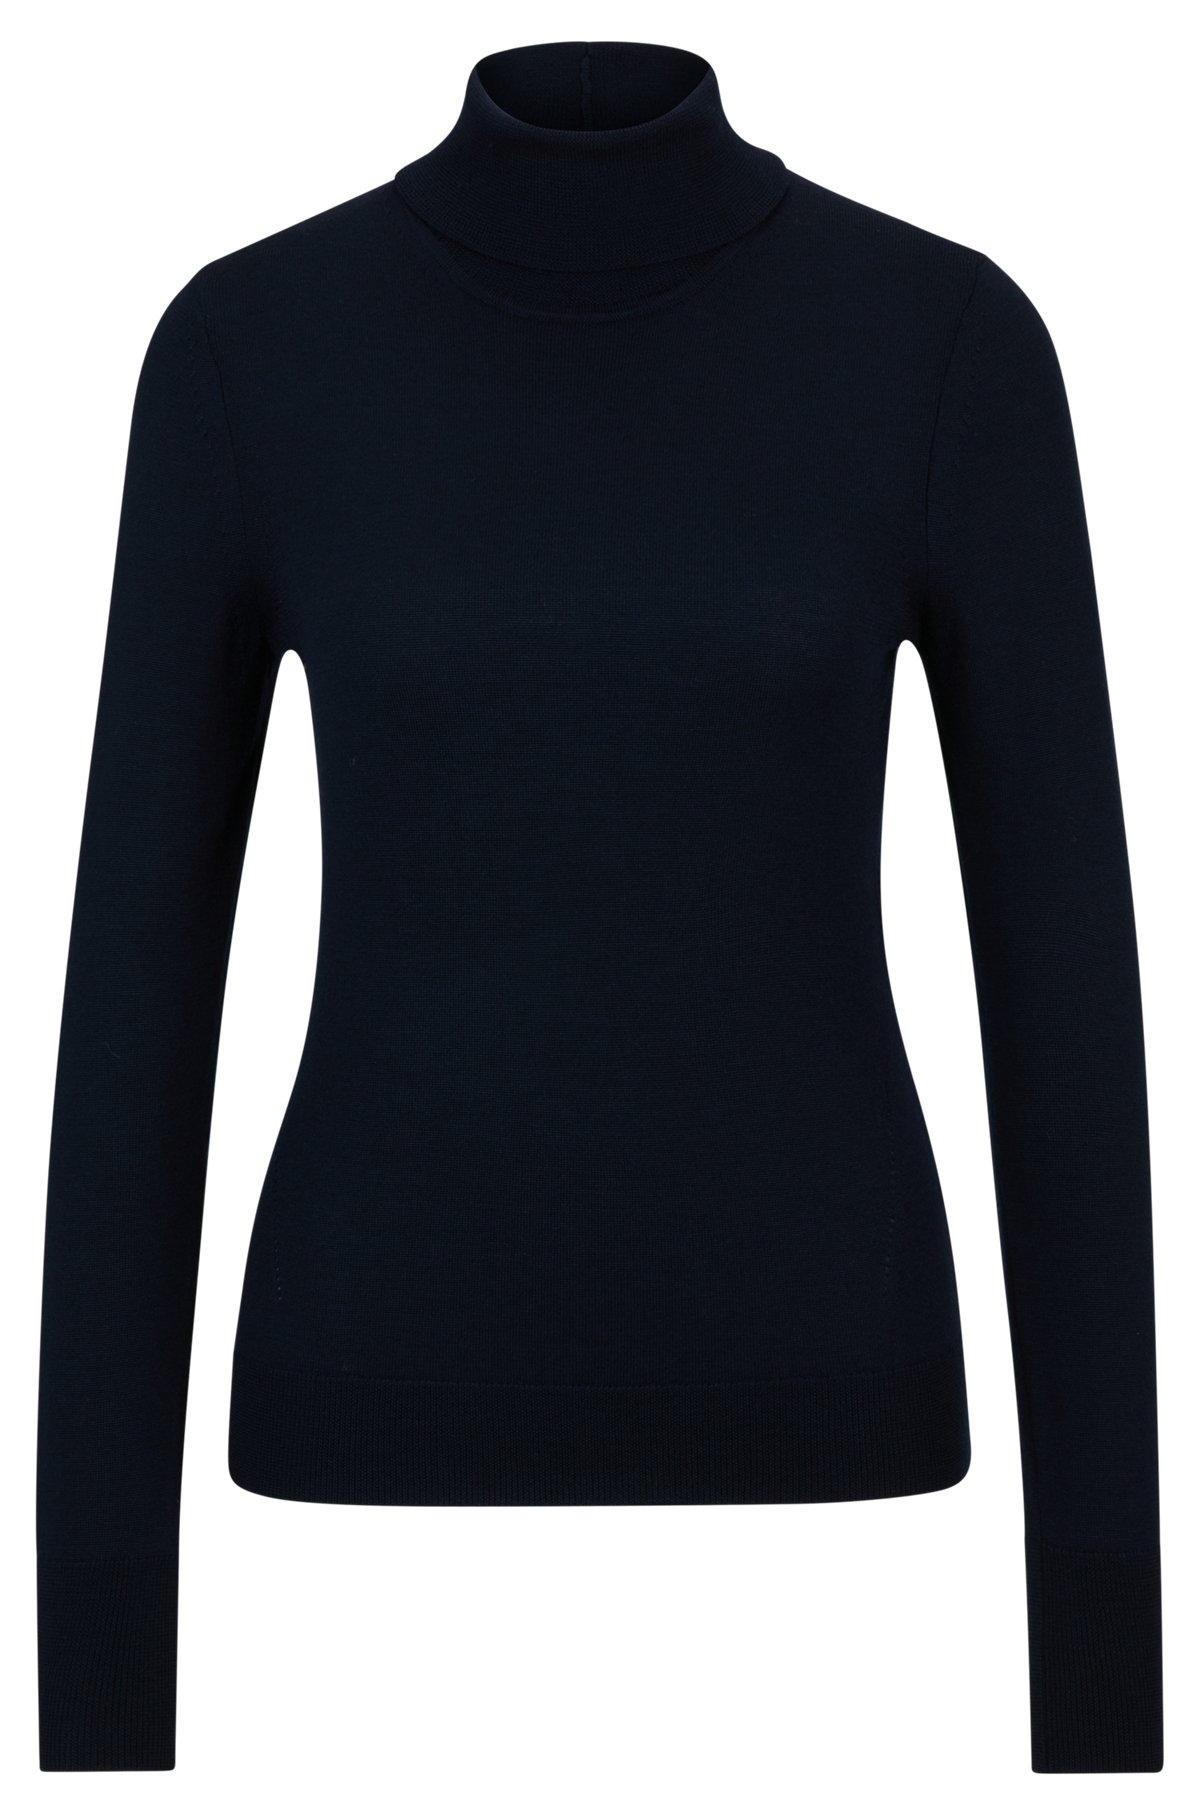 Rollneck sweater in virgin wool, Dark Blue